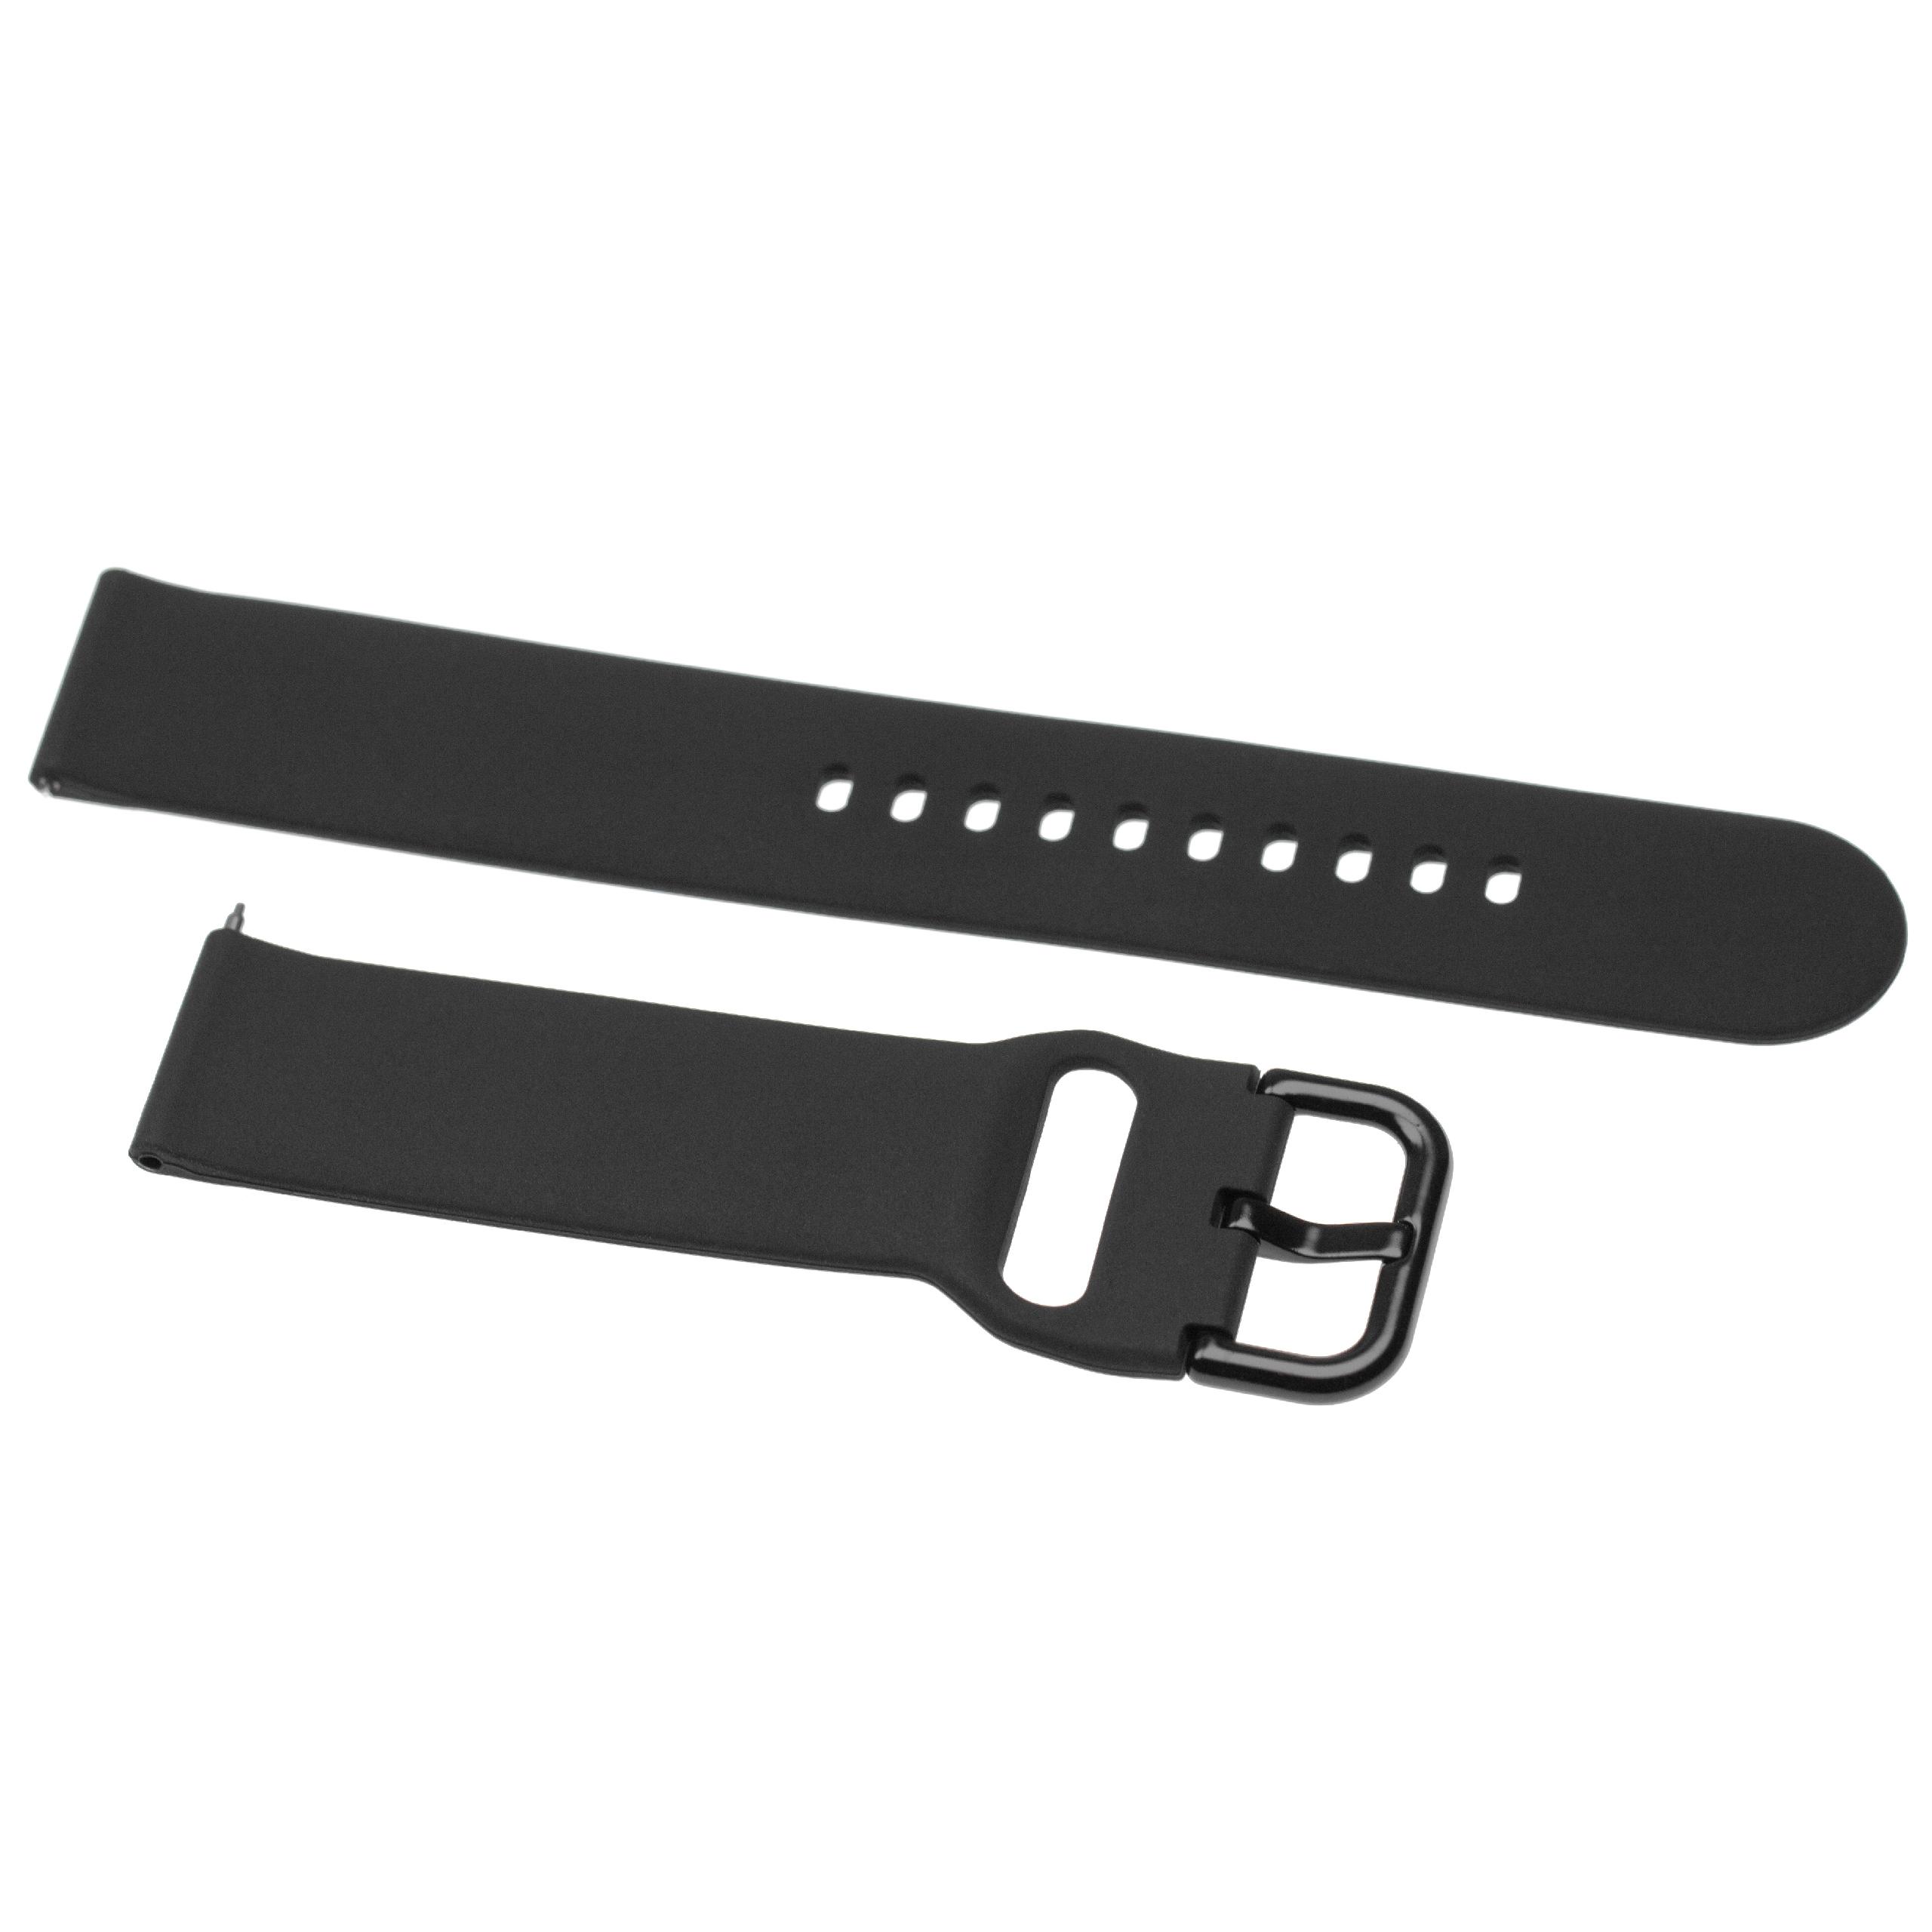 wristband for Samsung Galaxy Watch Smartwatch - 13 + 8.8 cm long, 20mm wide, silicone, black